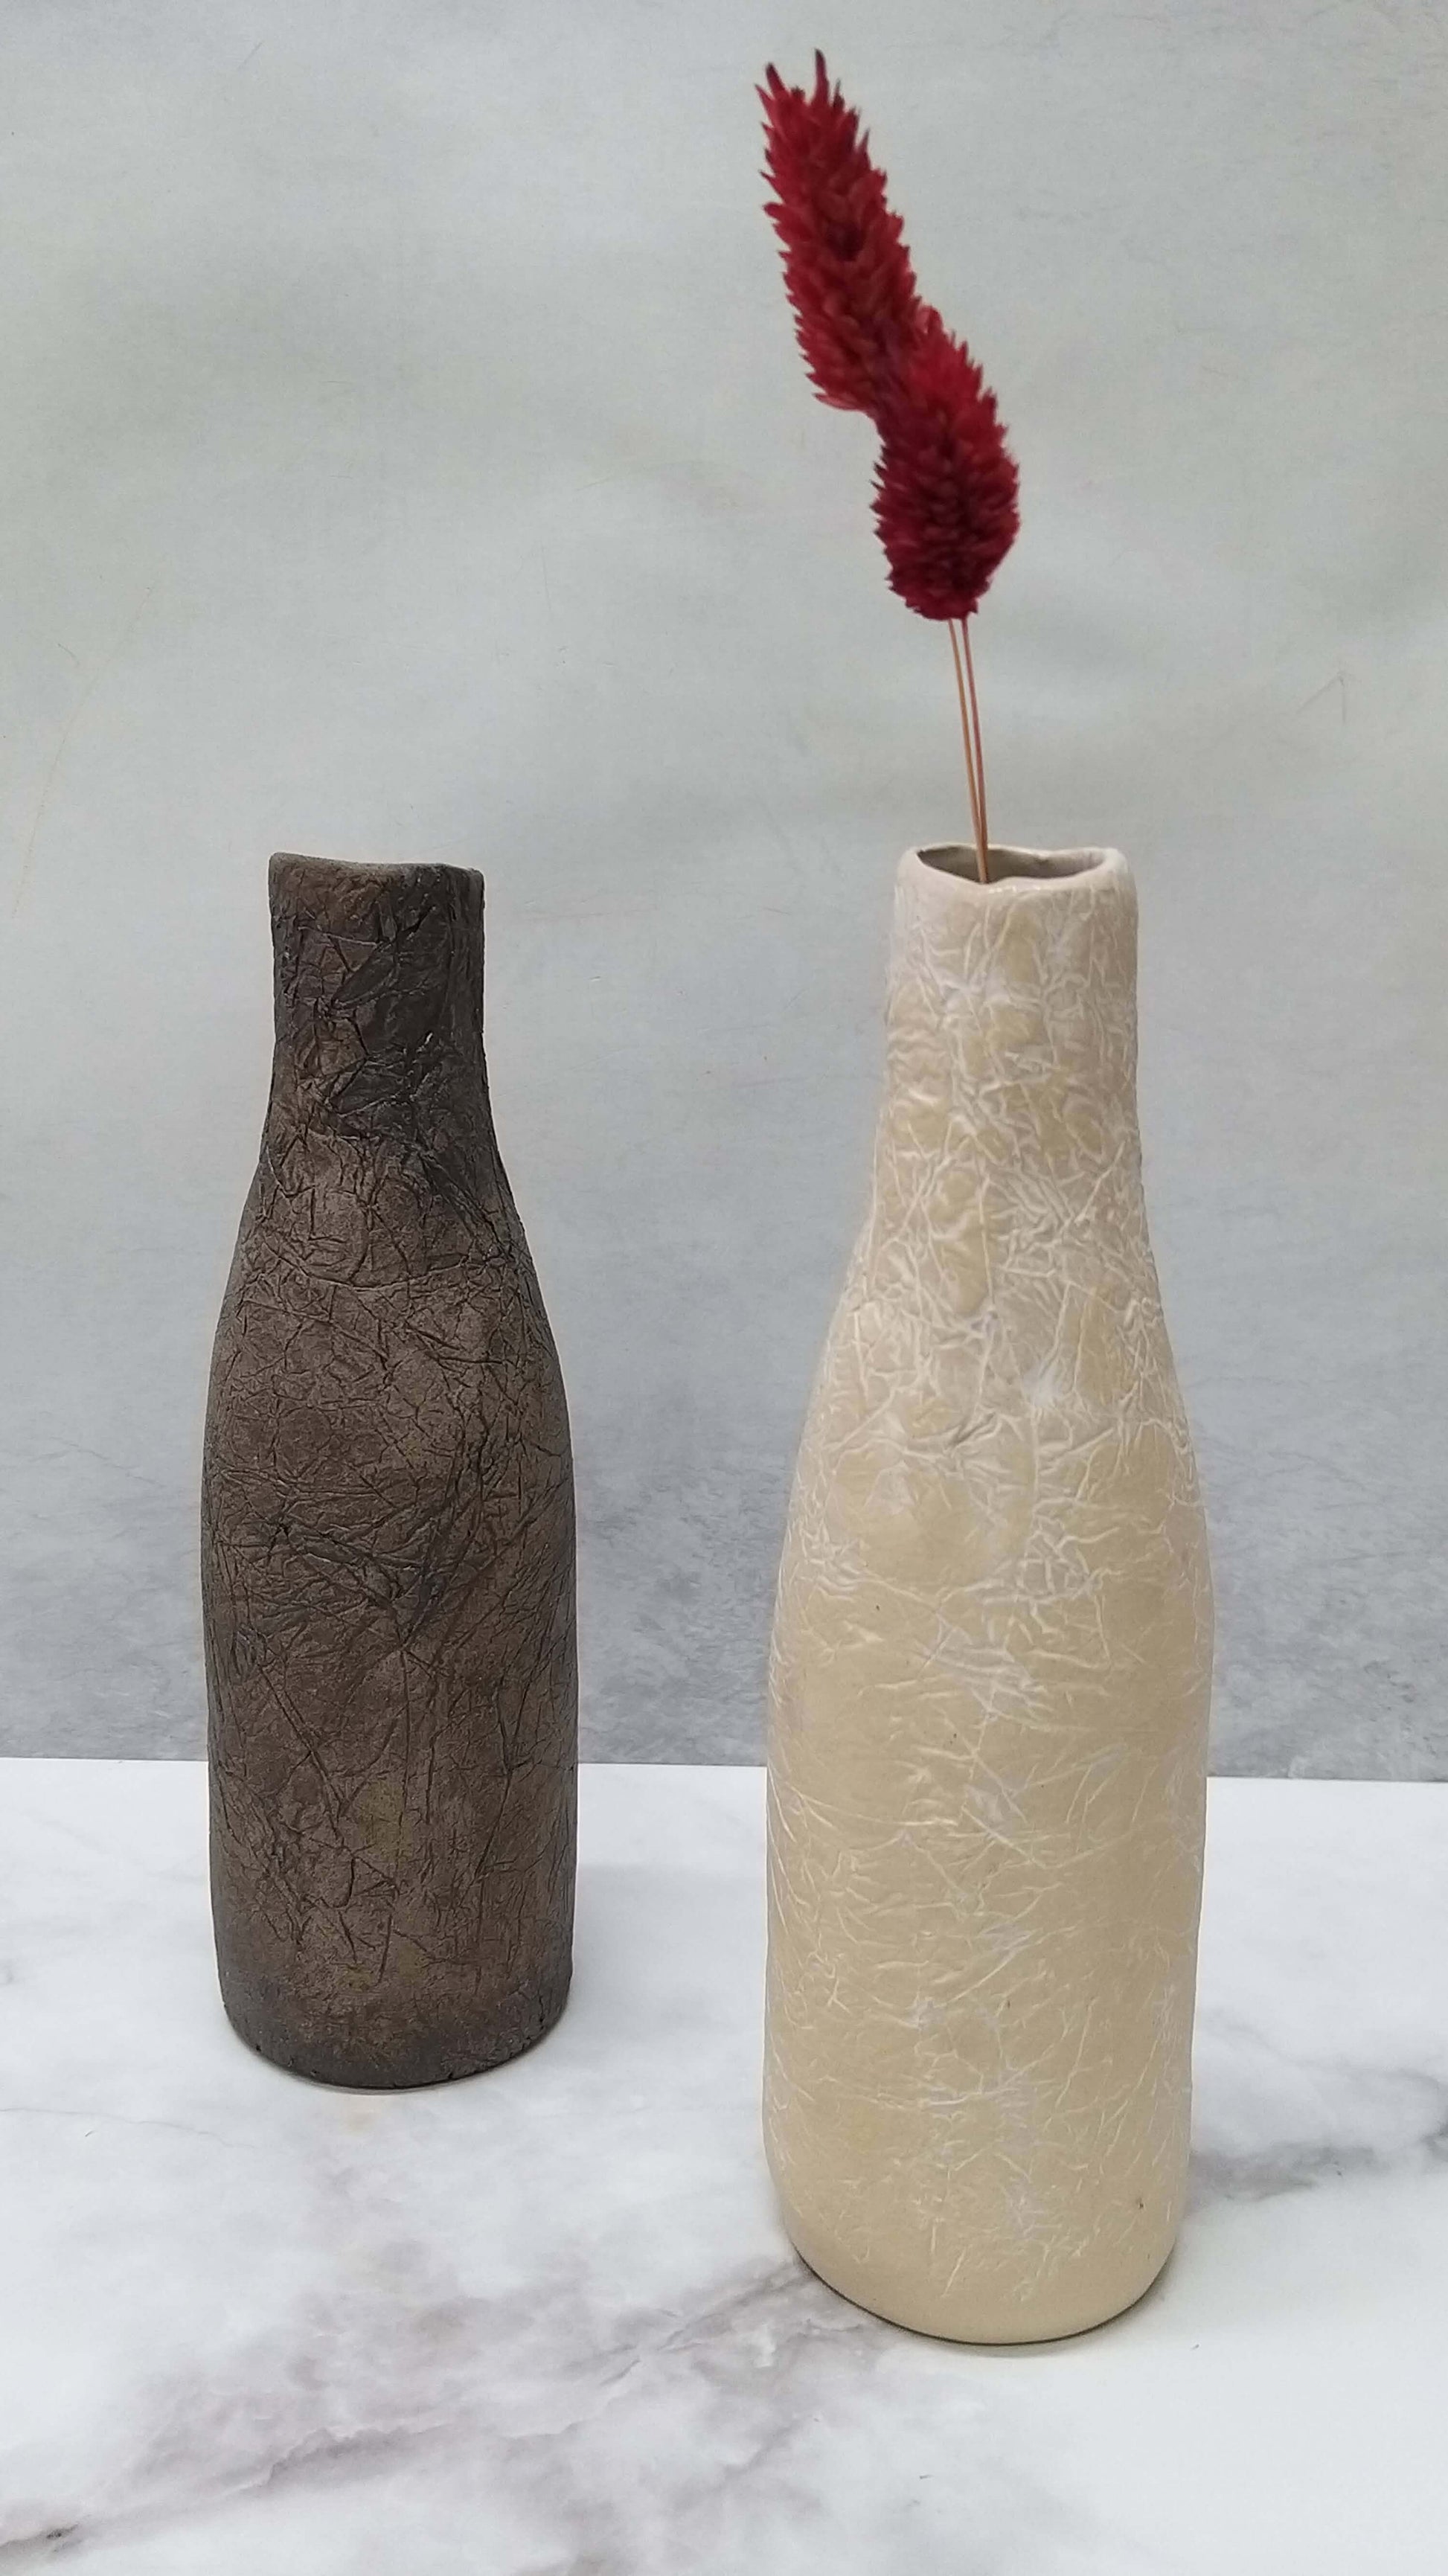 black ceramic vase and whote ceramic vase with red flowers in the white vase